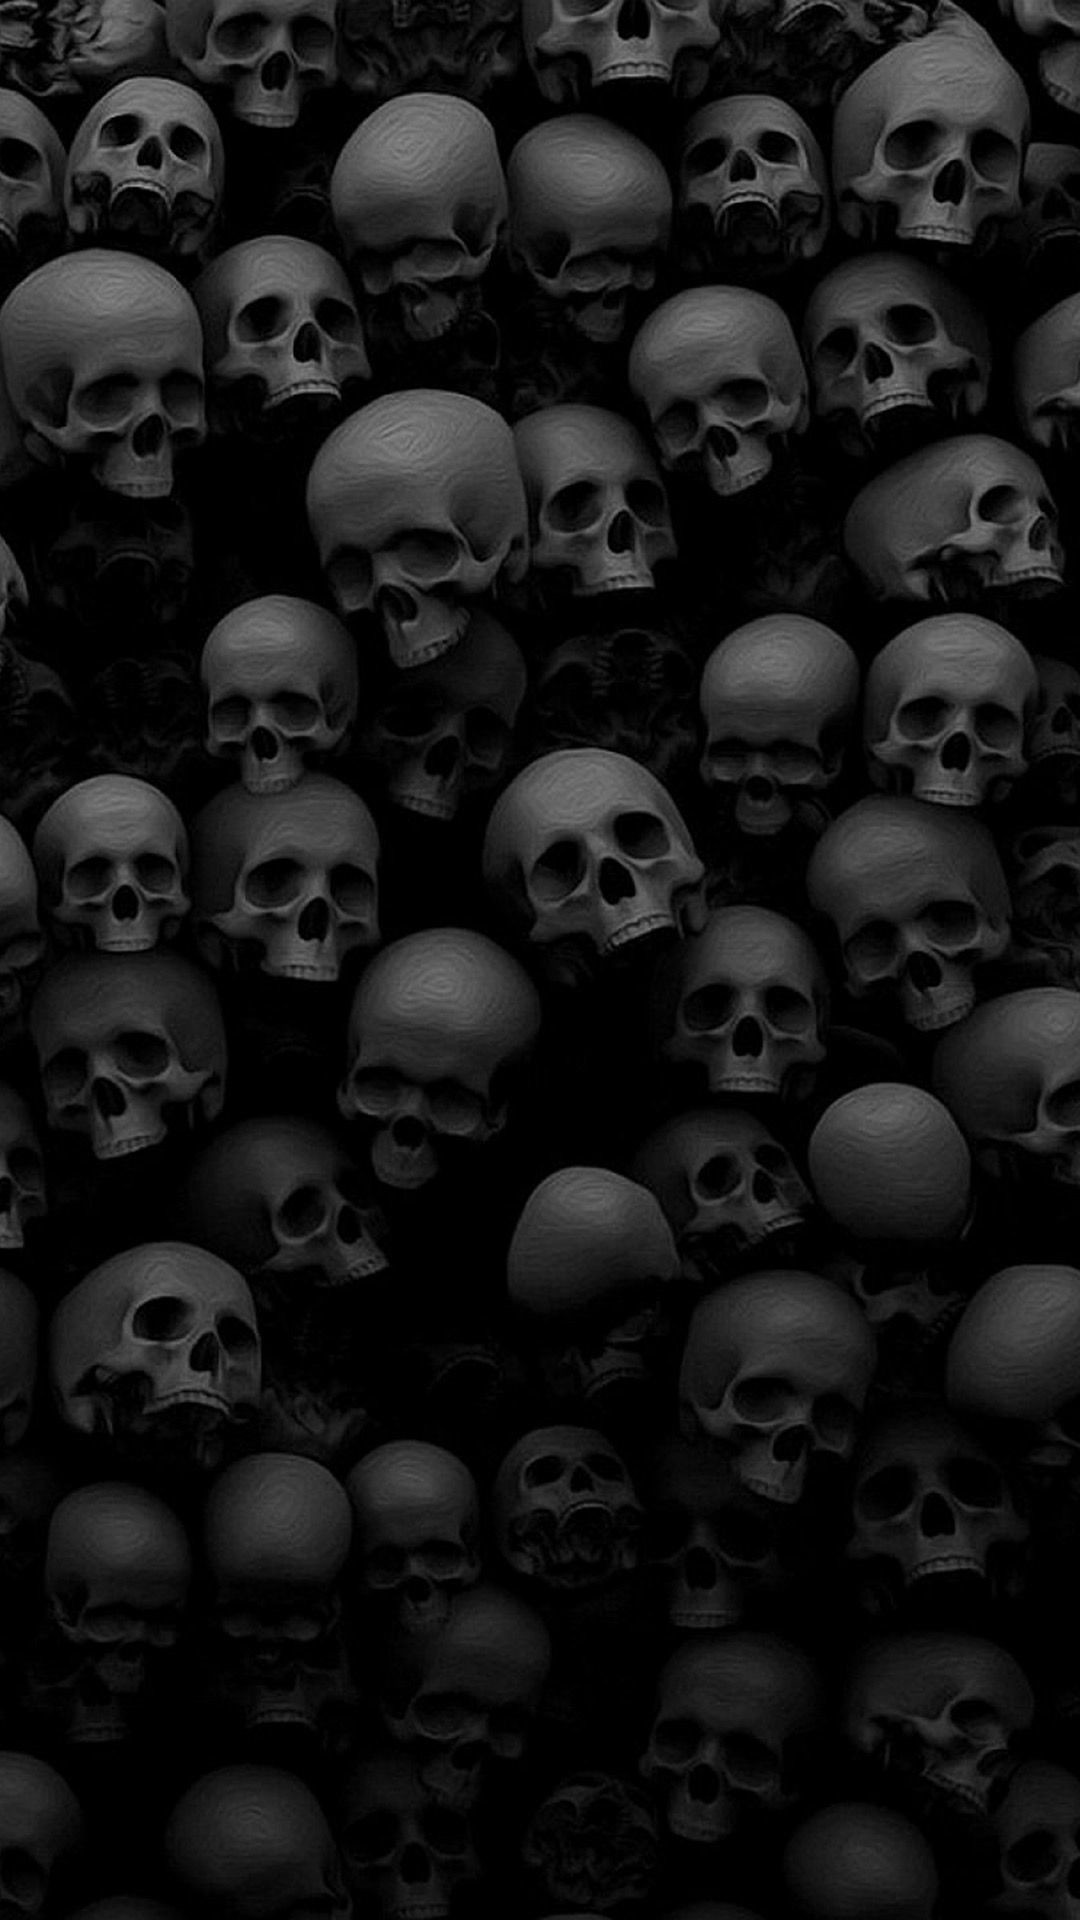 Ð½ð° Ðºð¾ñ€ñ ðµñ‚ Black Wallpaper For Mobile, Black - Skull And Bones  Background - 1080x1920 Wallpaper 